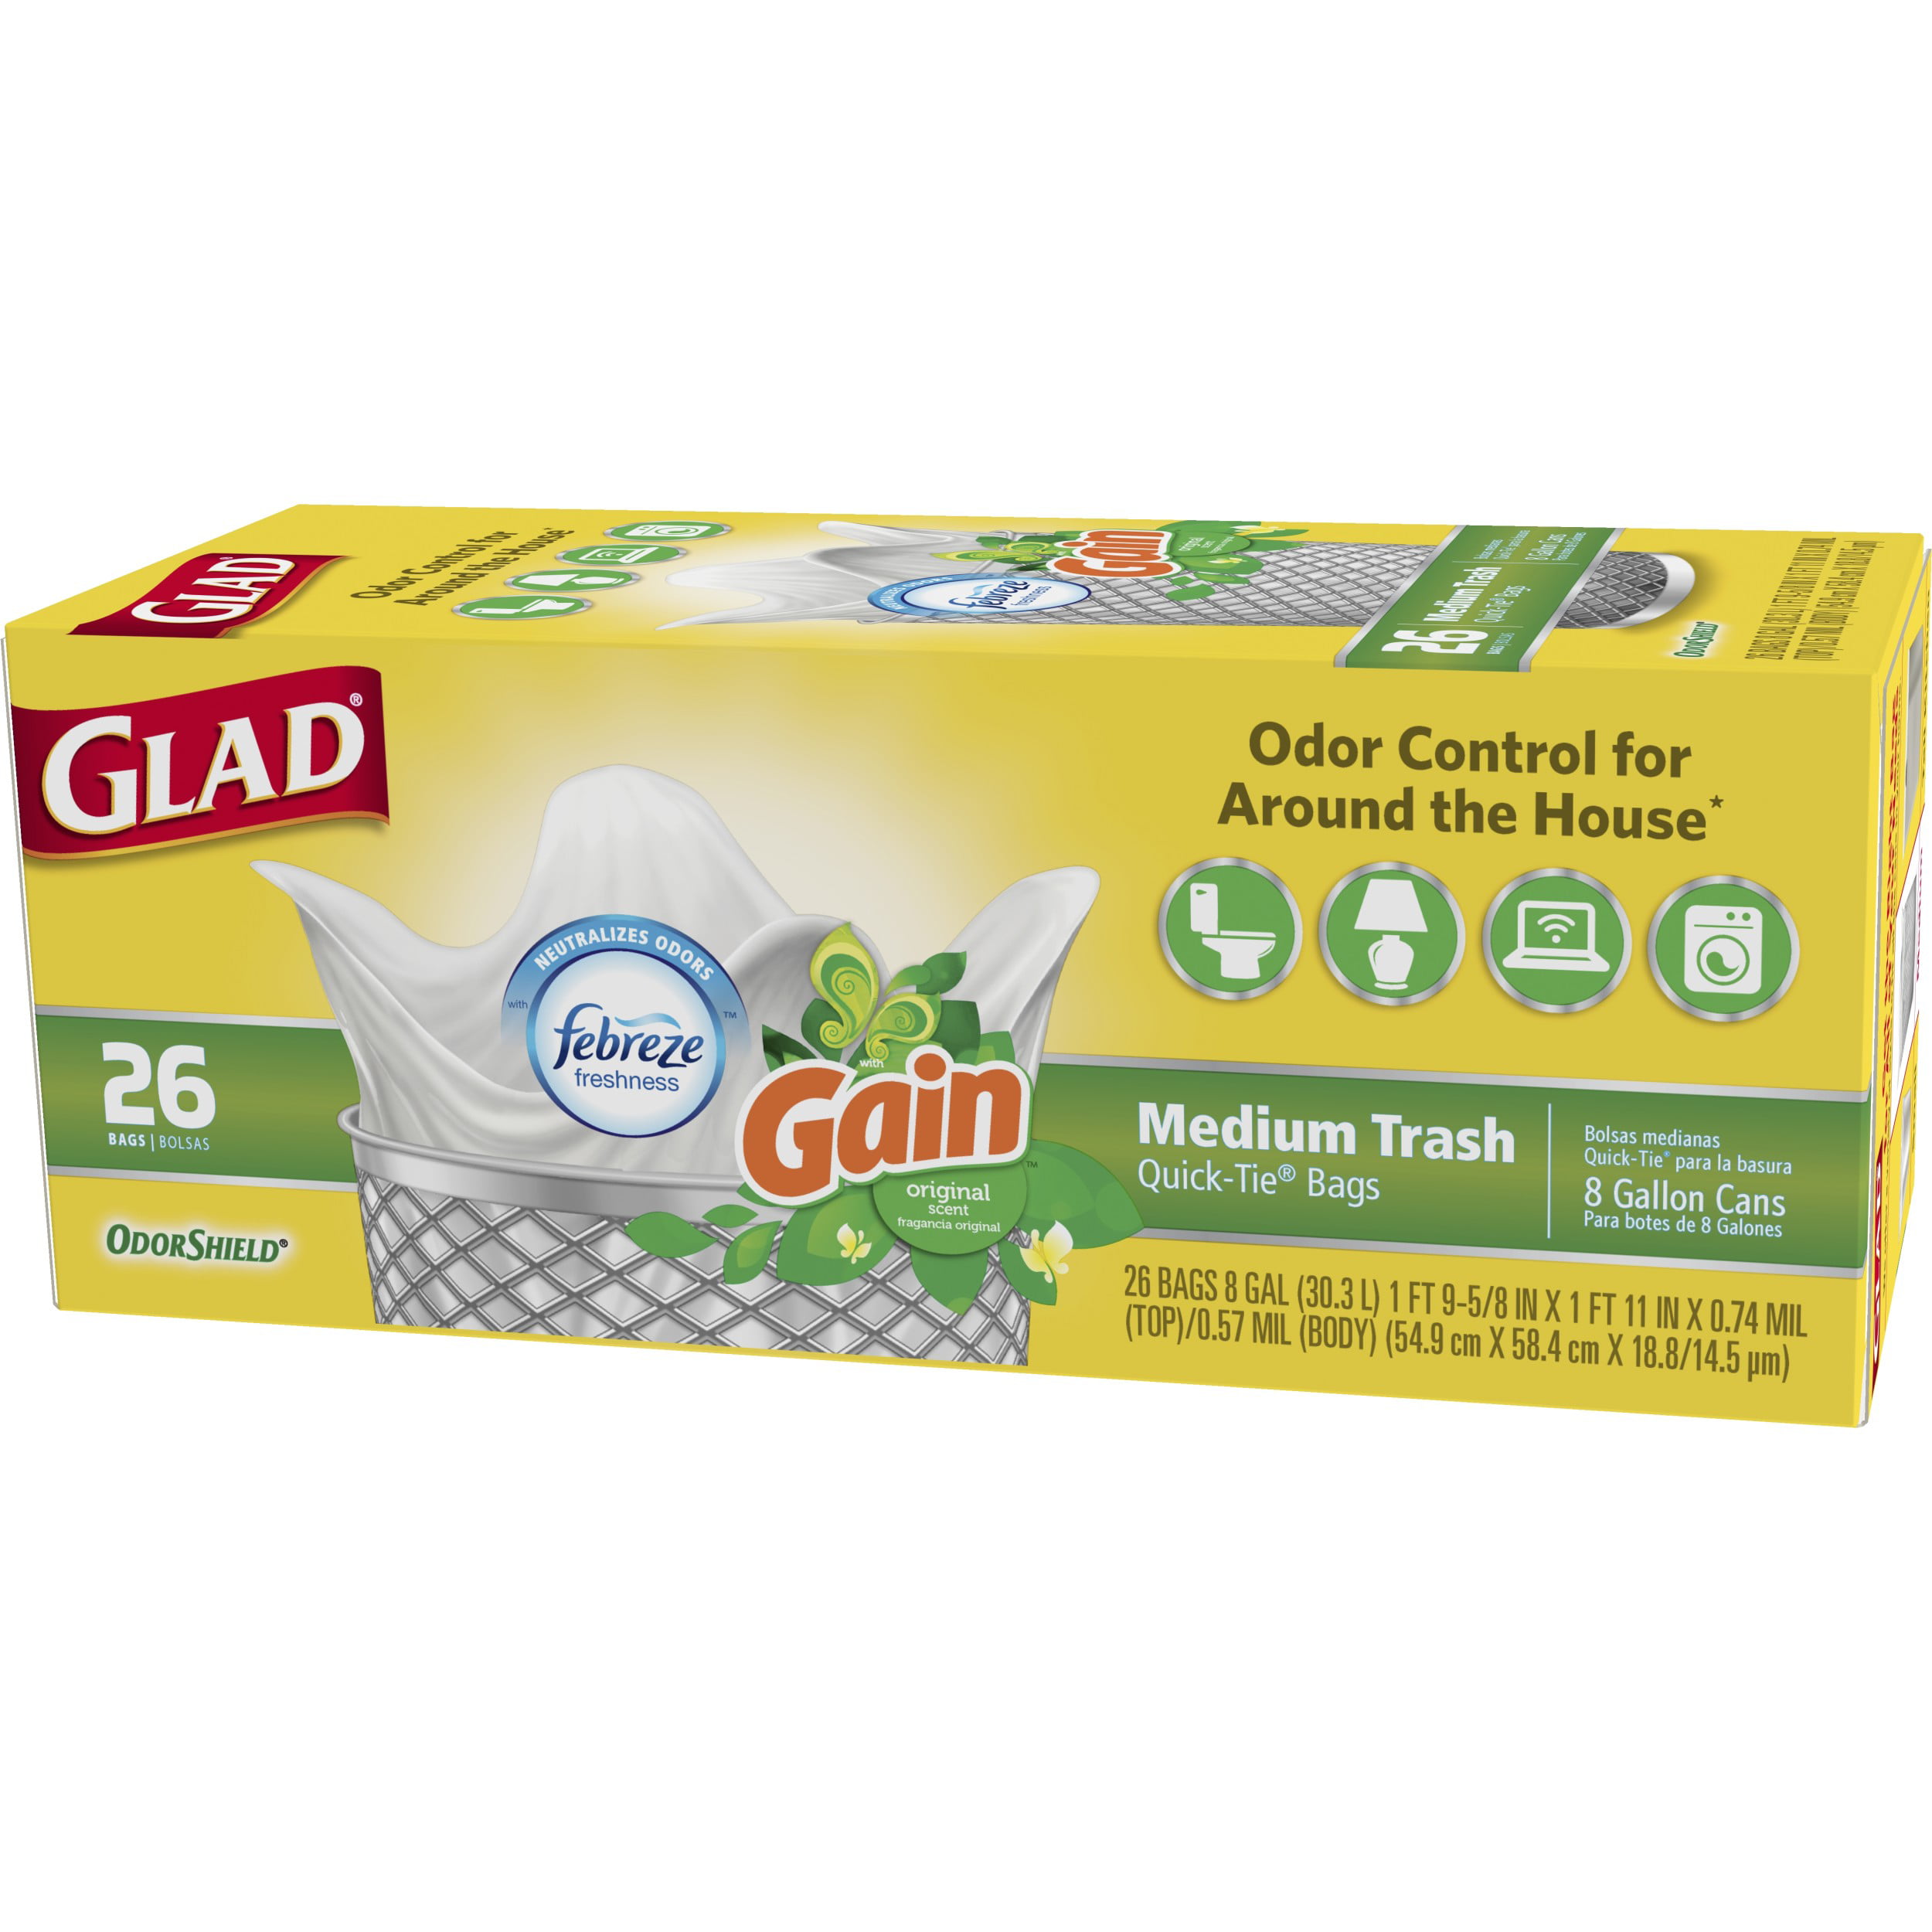 Glad Glad OdorShield Small Trash Bags - Gain Original with Febreze  Freshness - 4